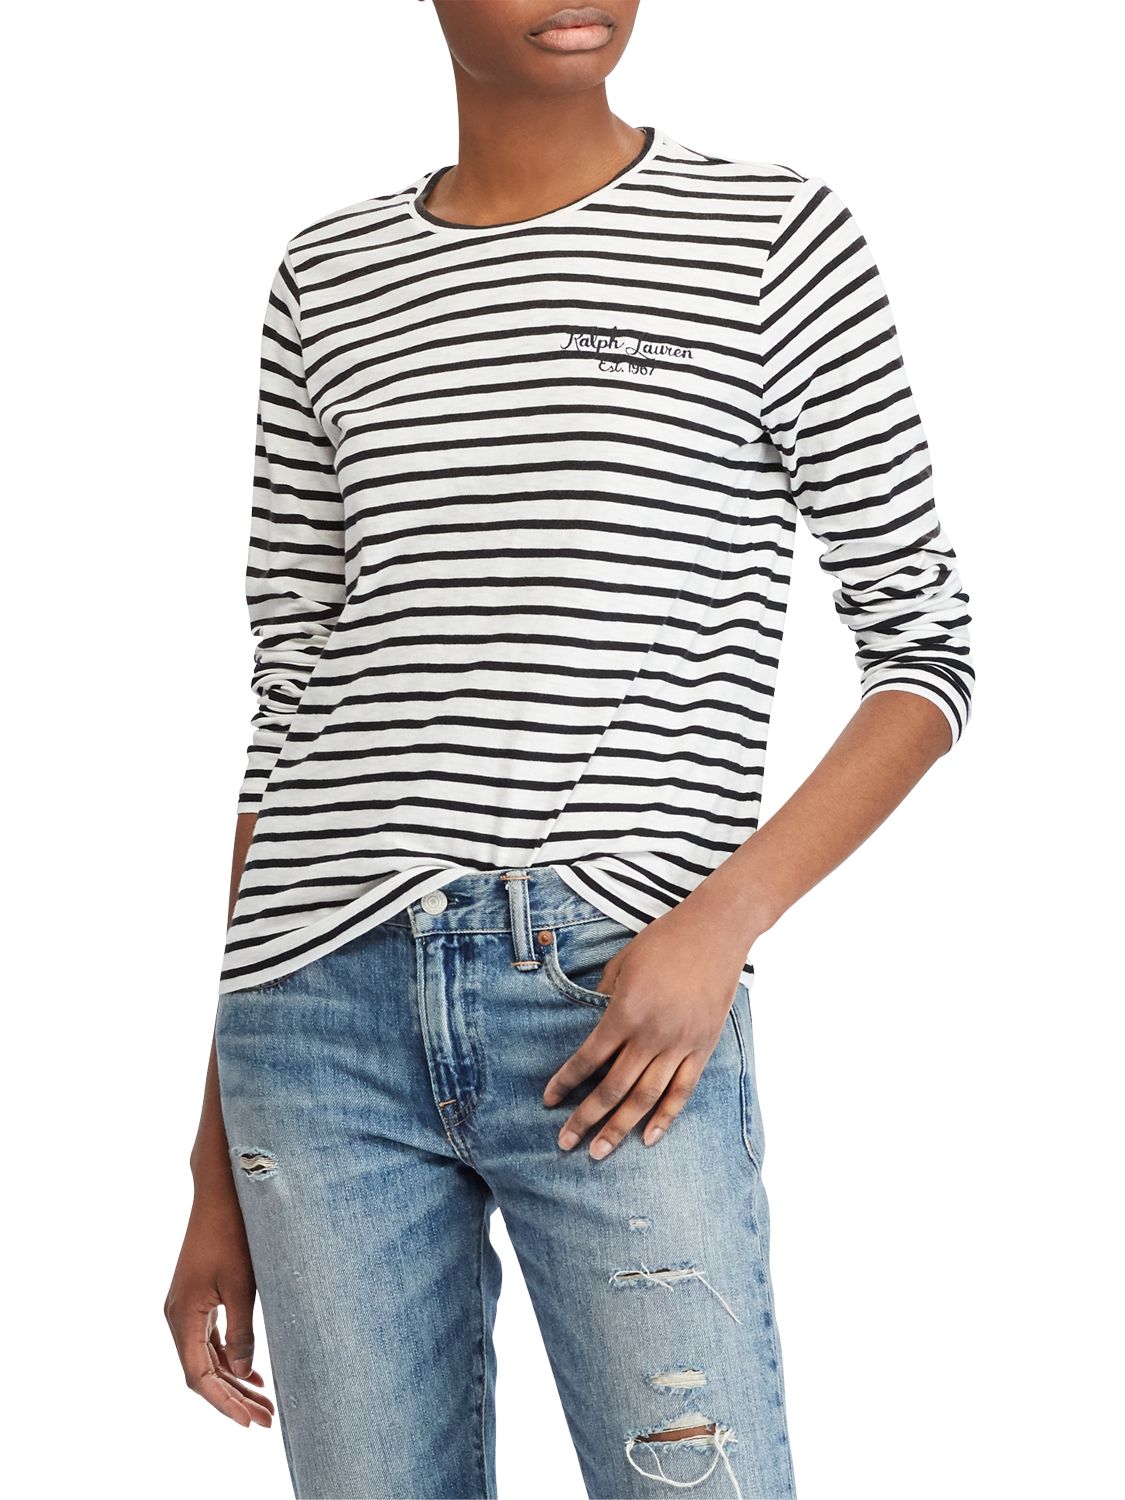 ralph lauren black and white striped t shirt